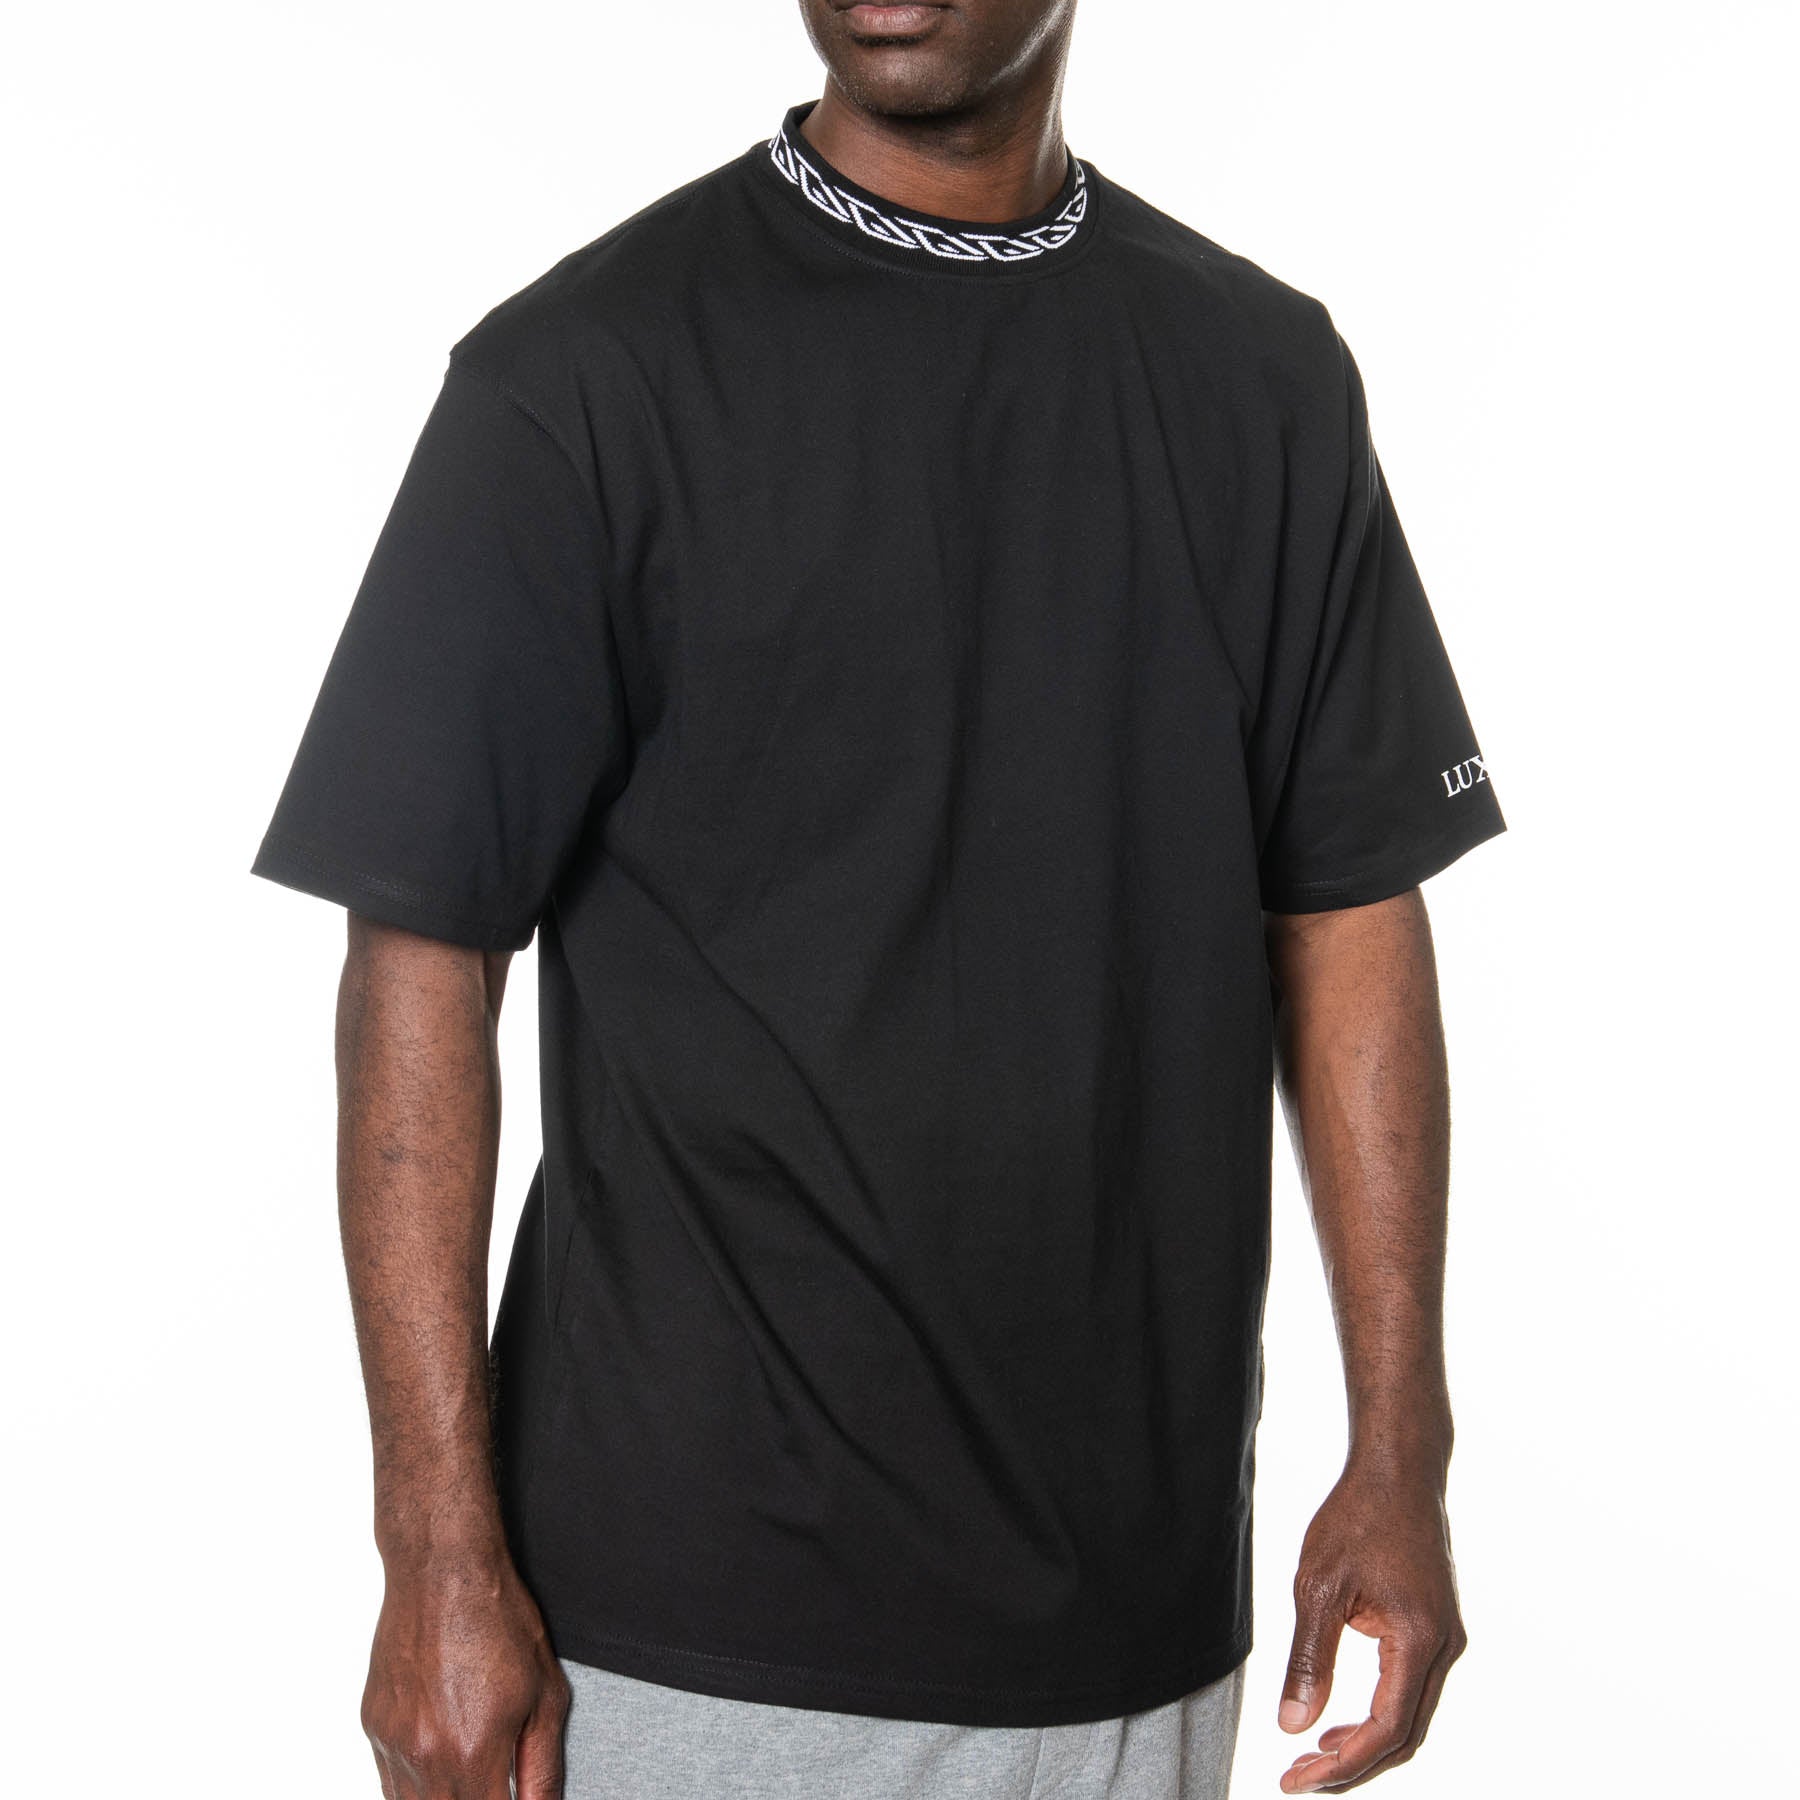 Luxe-T Men's Chain Collar T-Shirt White / 5X